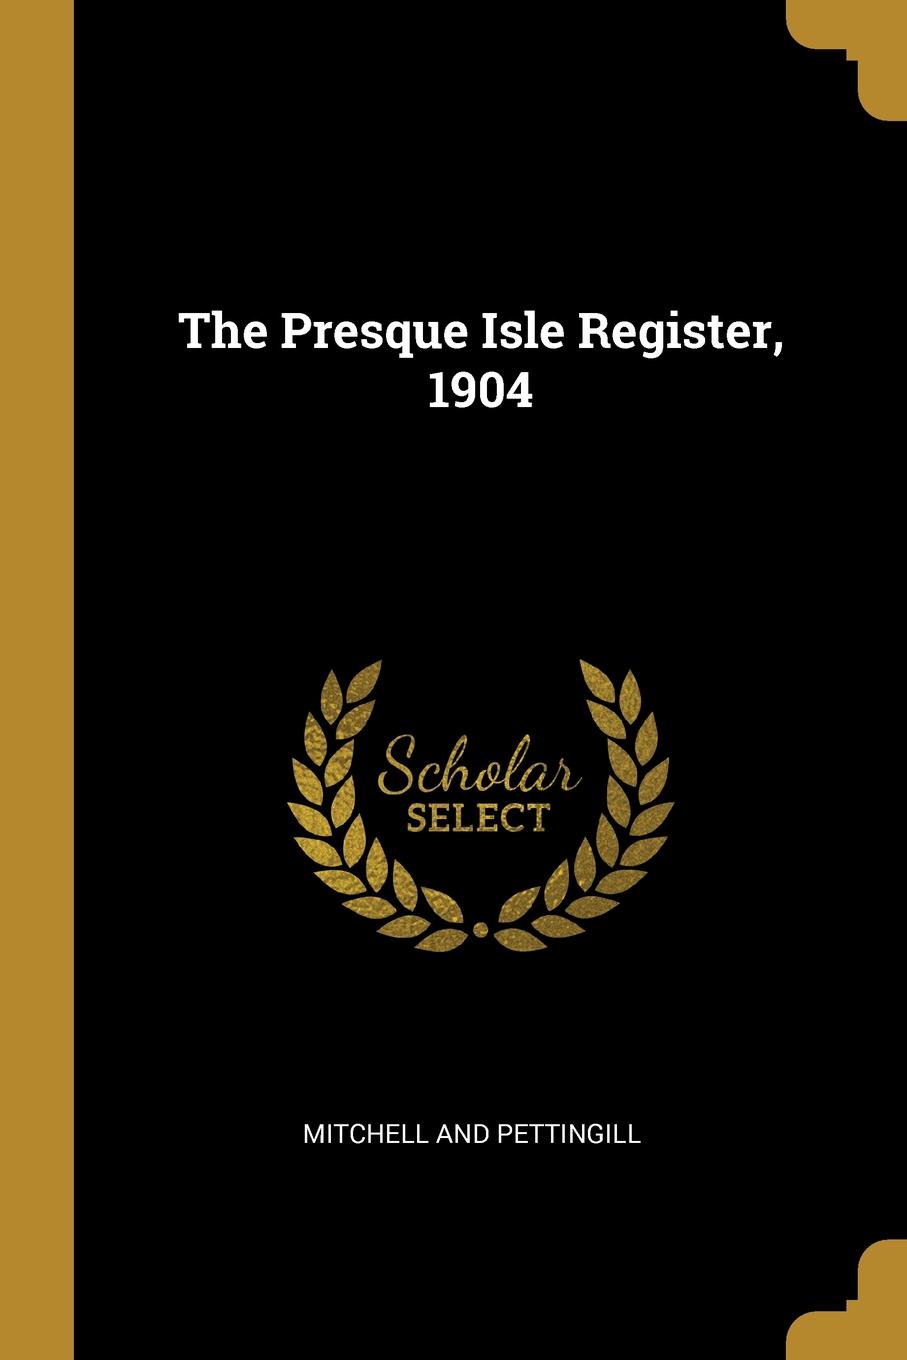 The Presque Isle Register, 1904